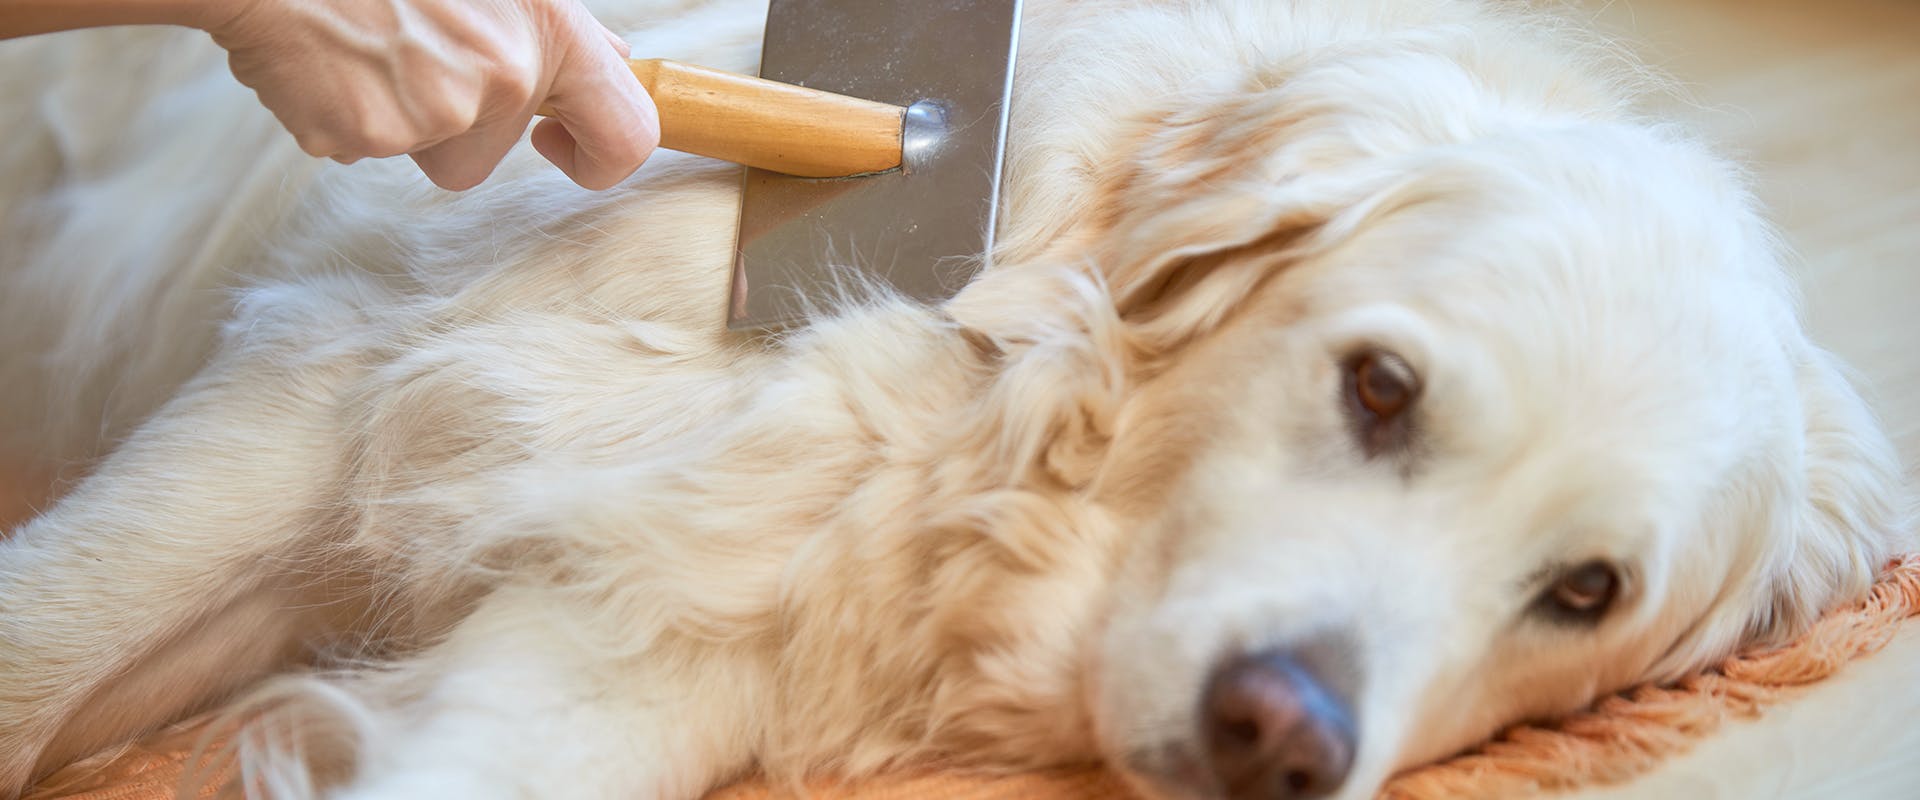 Best dog brushes for shedding - a Golden Retriever being brushed with a deshedding brush